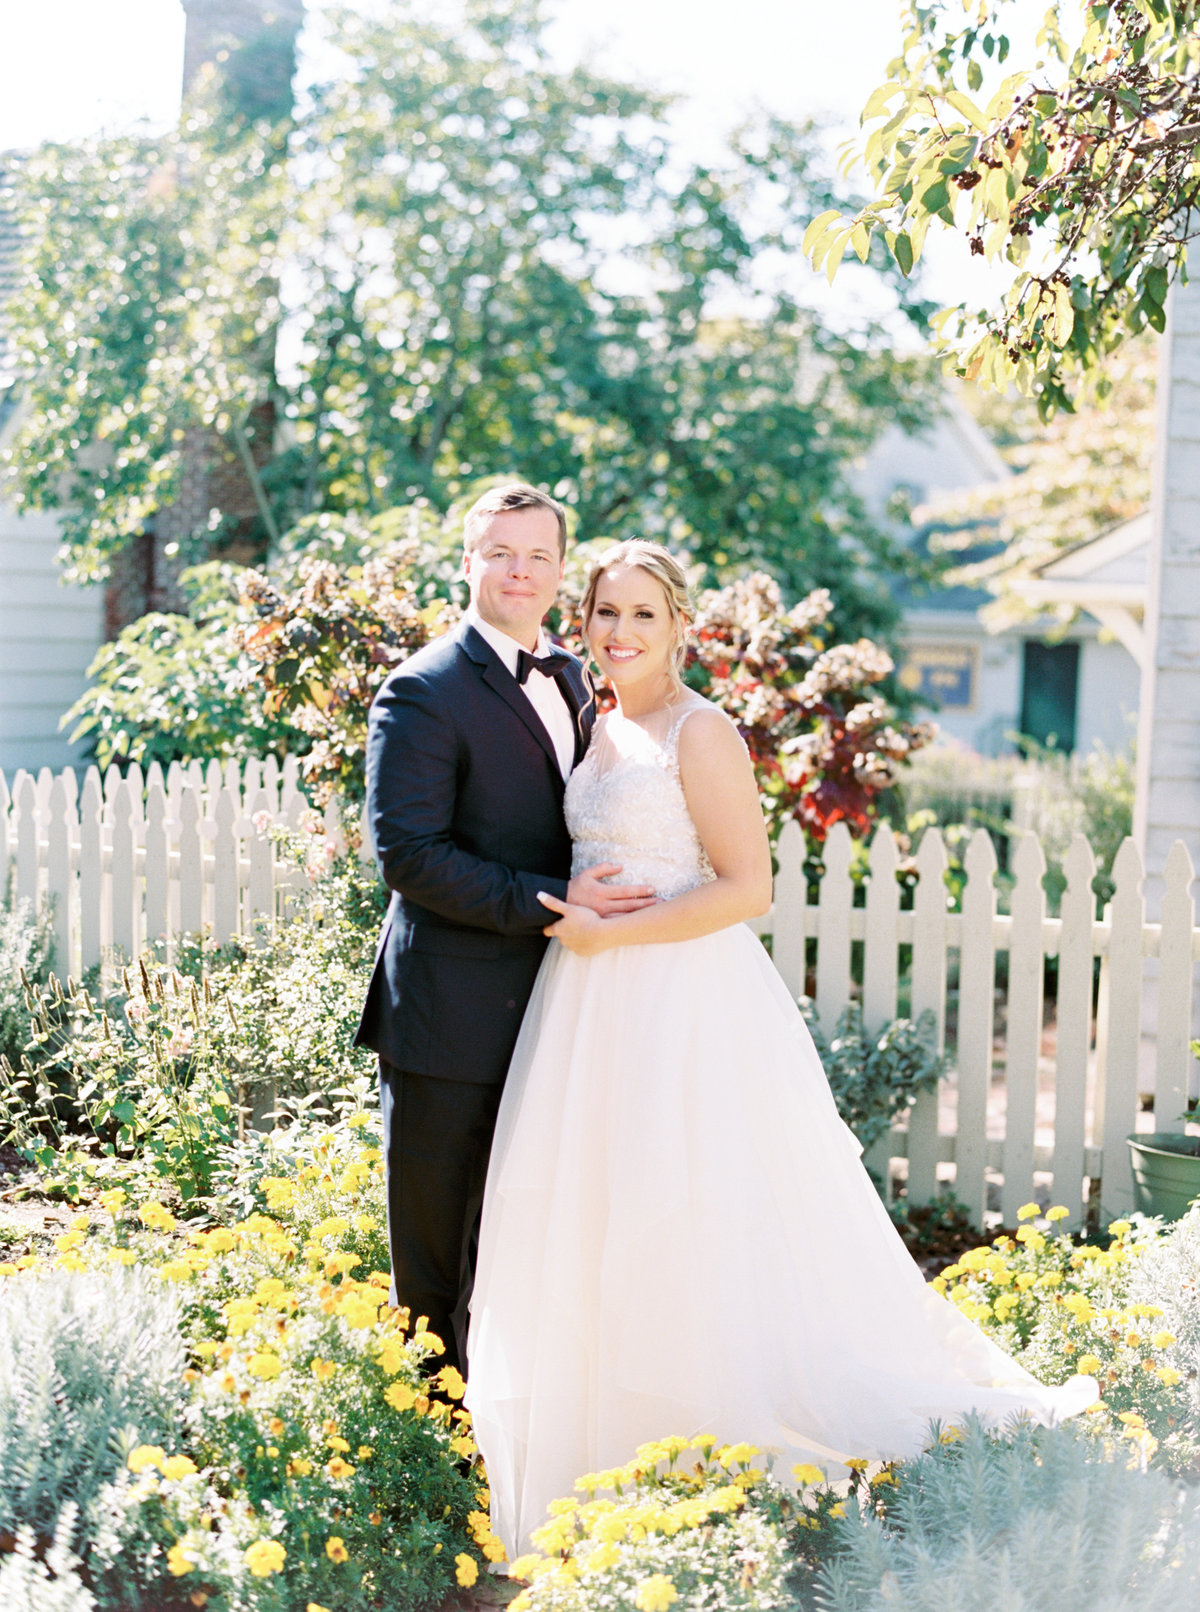 Easton_Maryland-fall-backyard-wedding-photographer-Richmond-natalie-jayne-photography-image-01